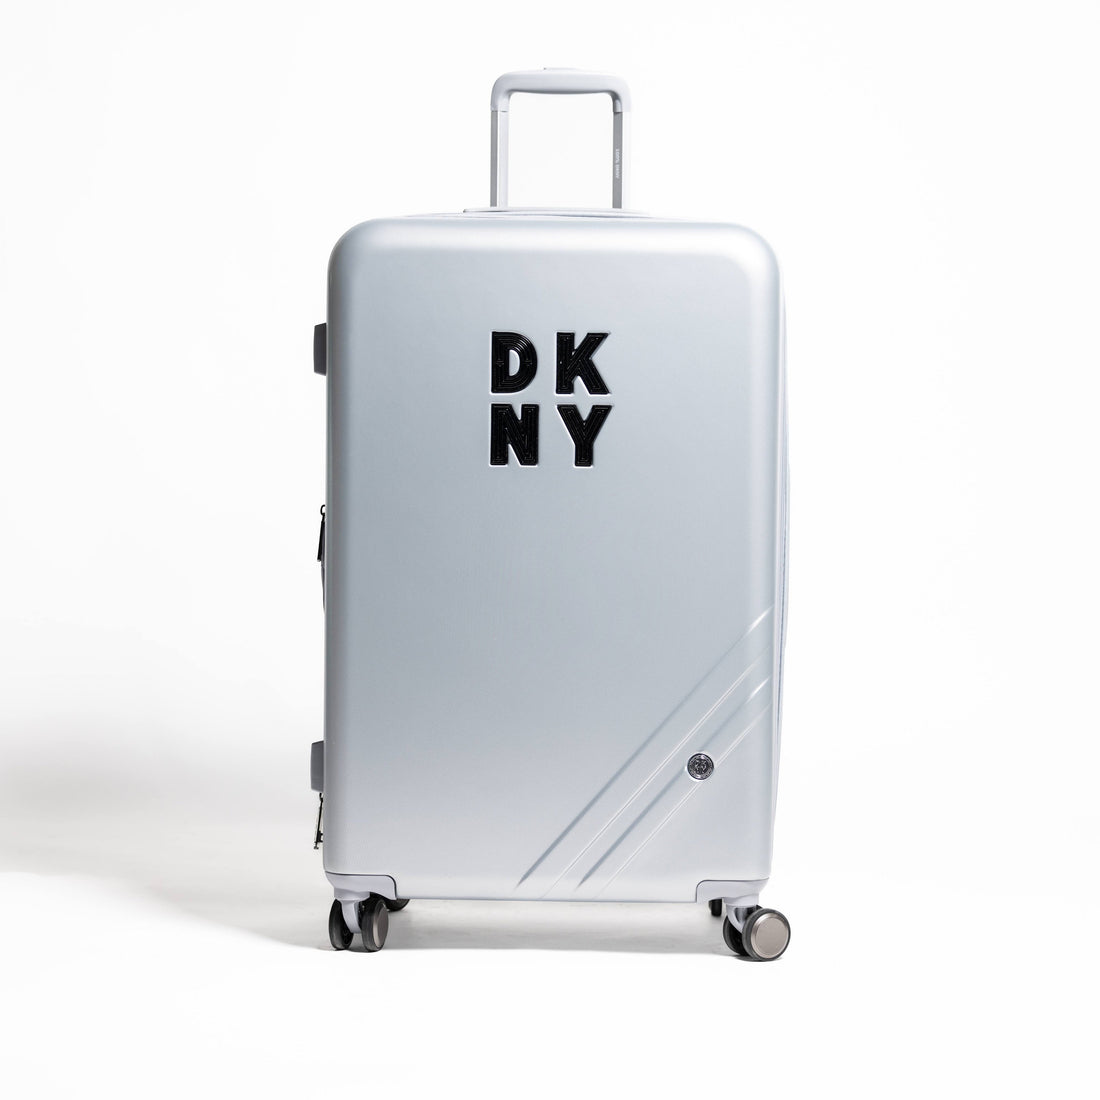 DKNY Silver Large Luggage_DH818FR4_SIL_01